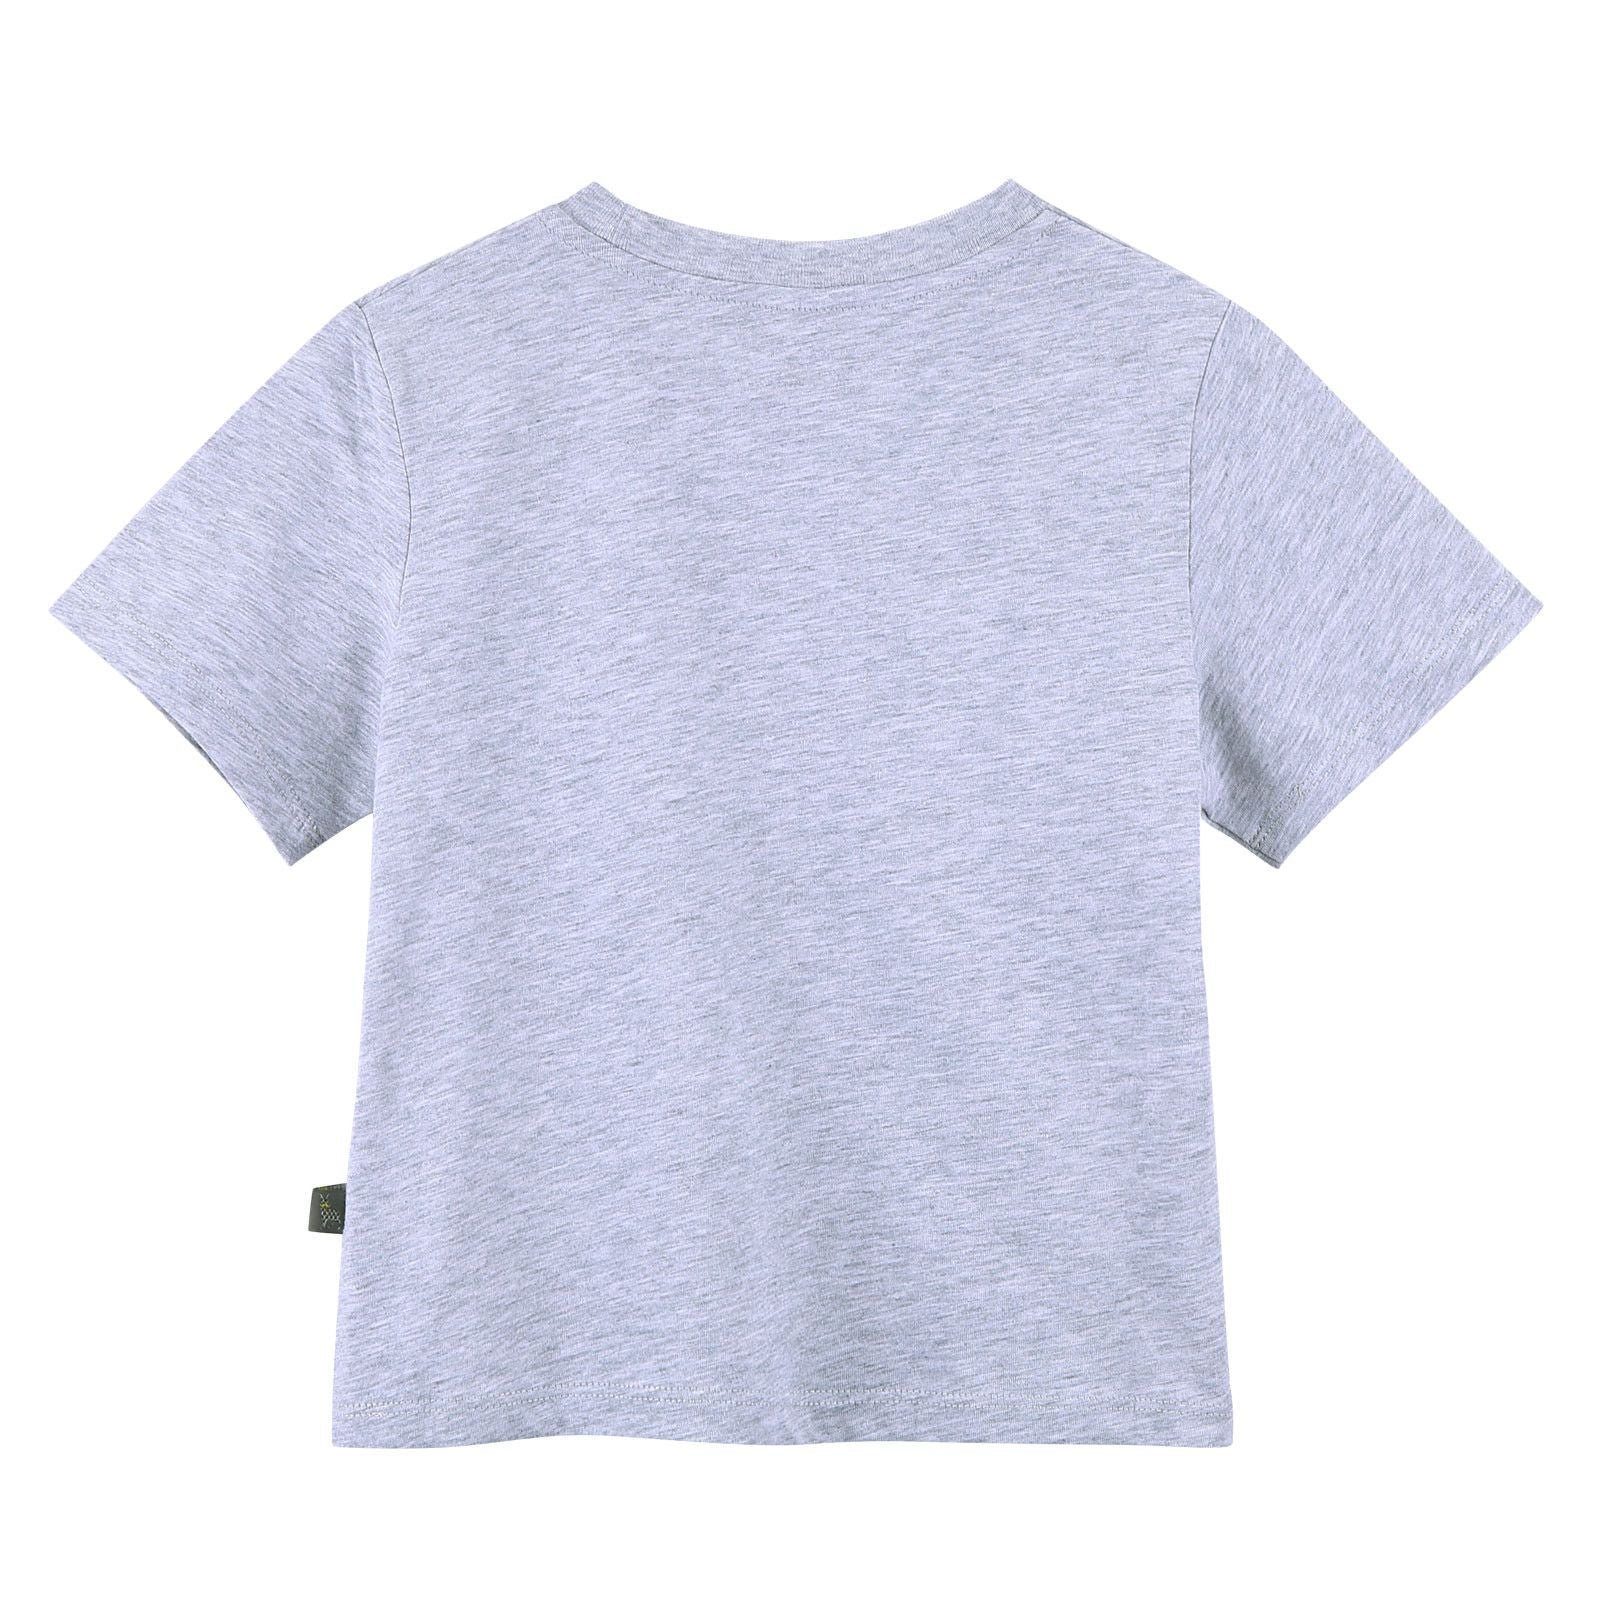 Boys Grey Cotton Colorful  Yeti Printed T-Shirt - CÉMAROSE | Children's Fashion Store - 2